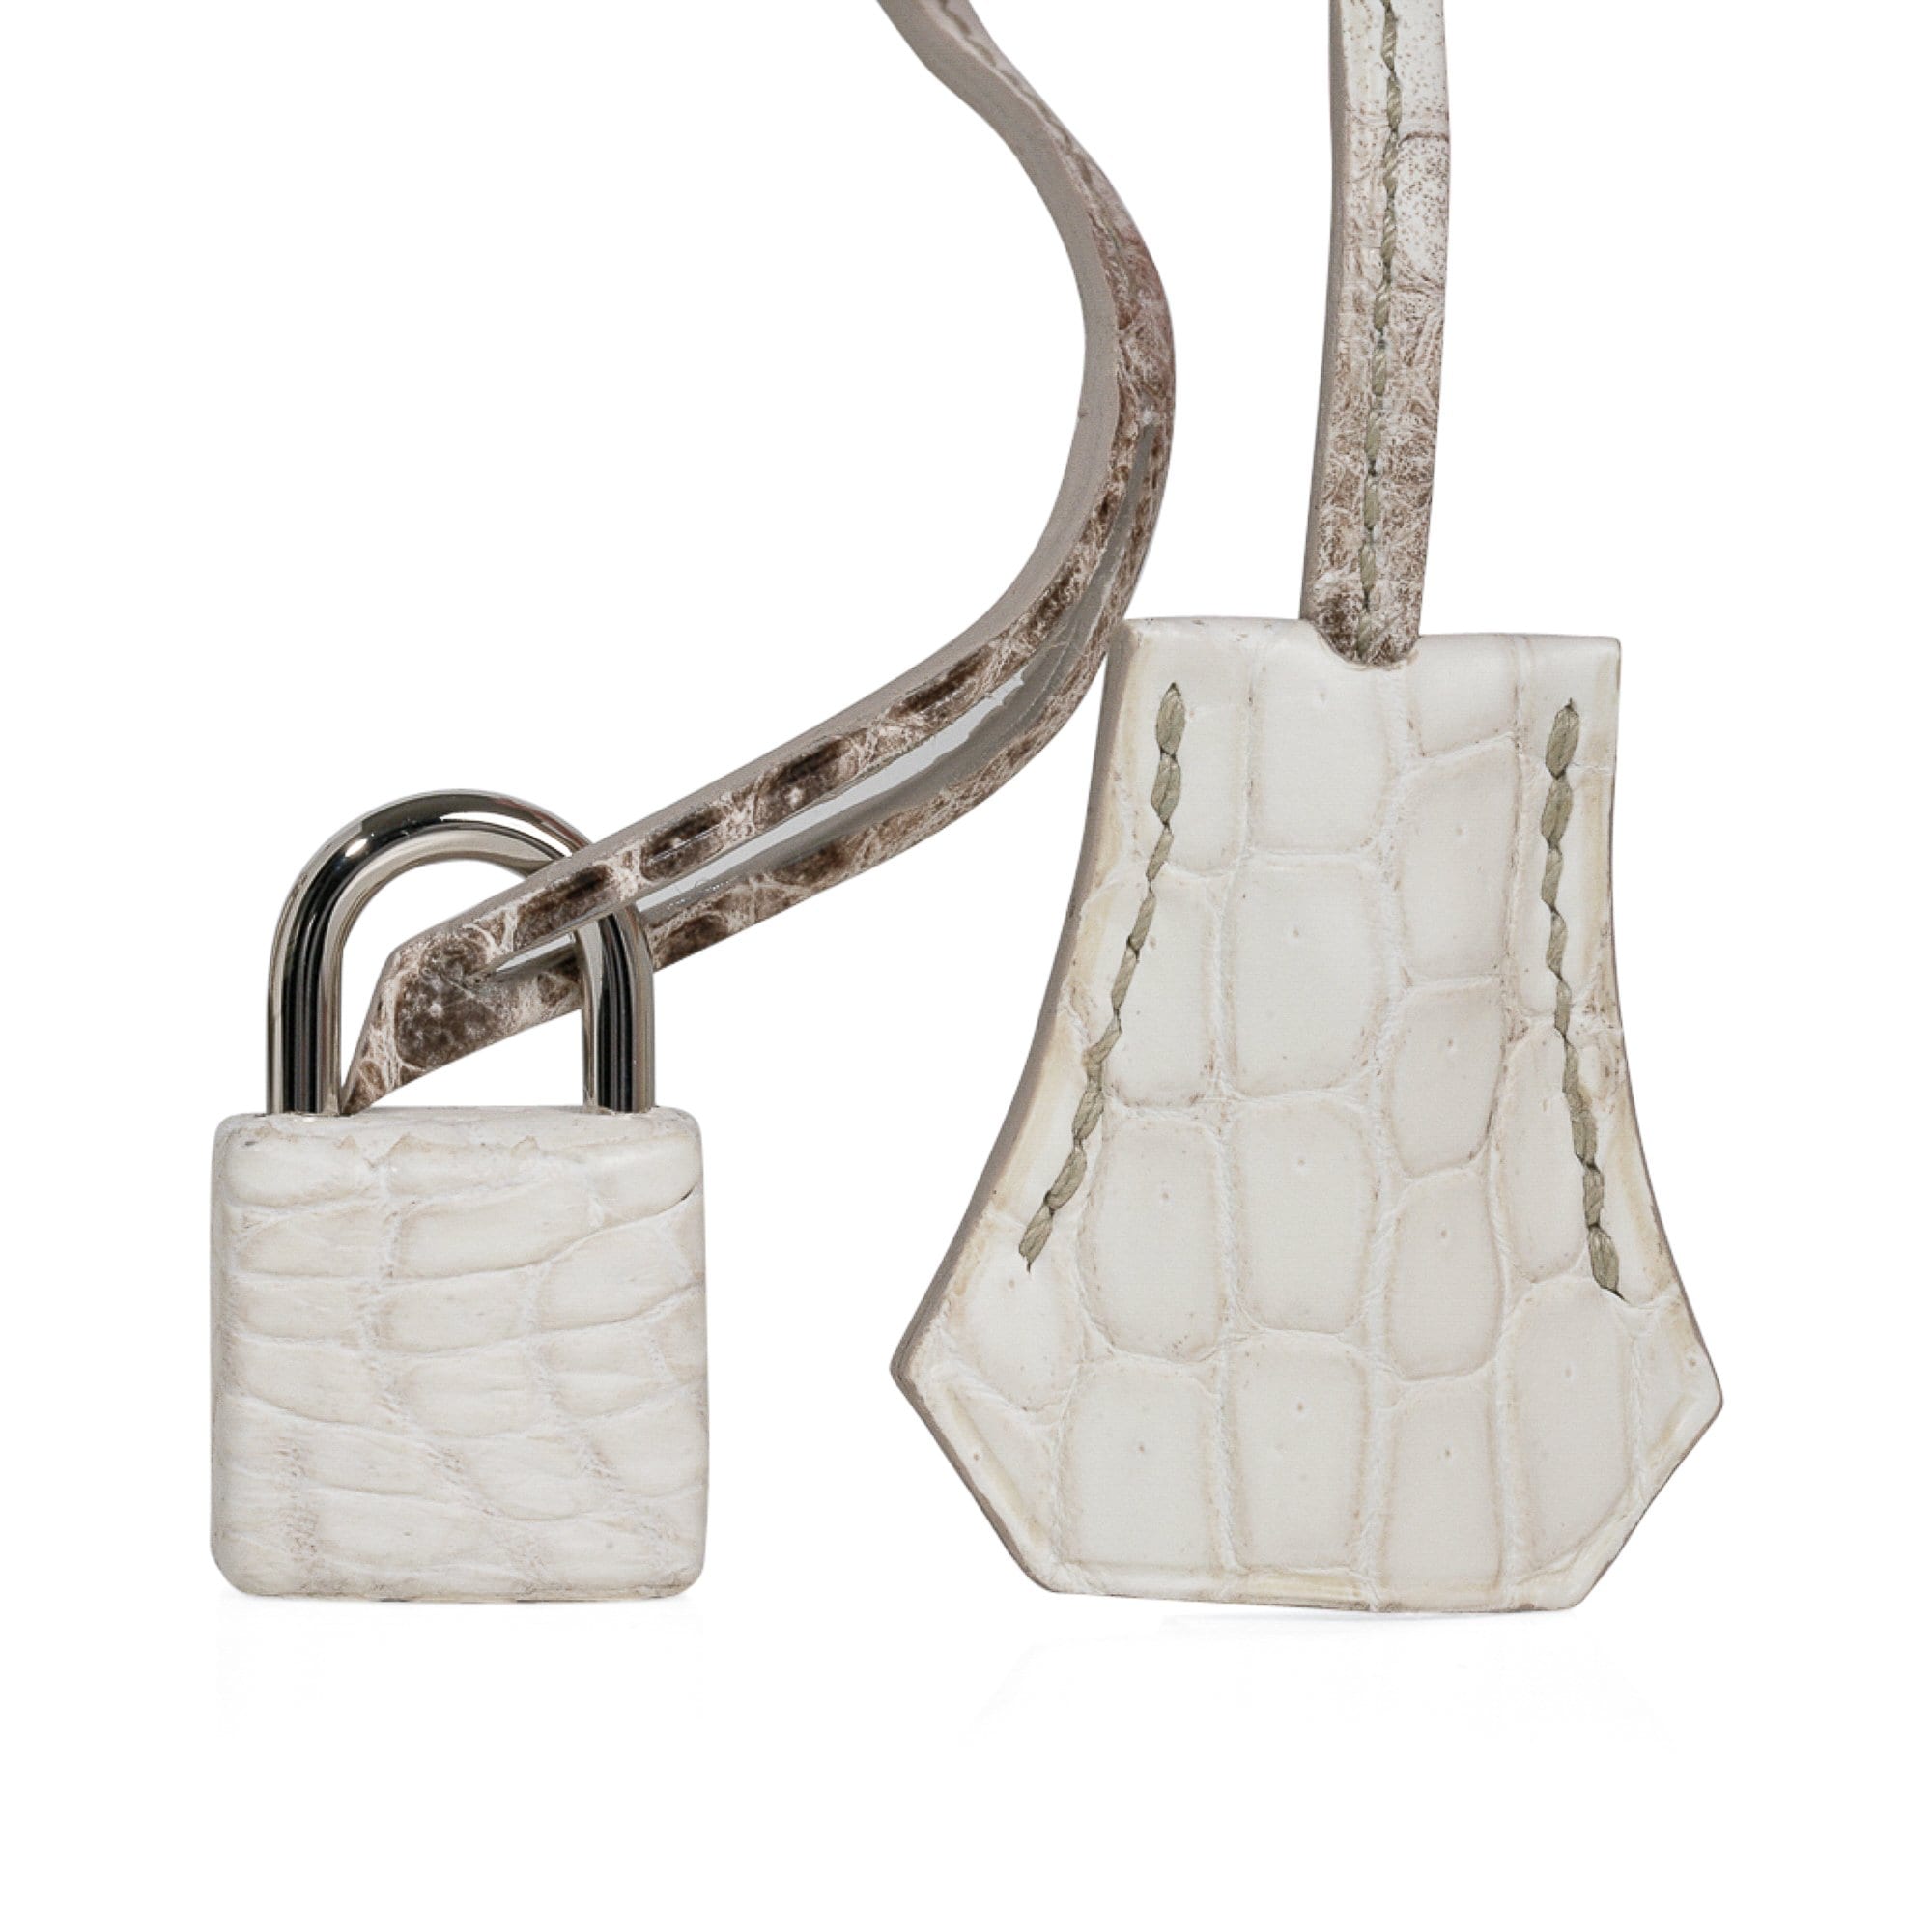 Hermès Birkin 25 Blanc Himalaya Crocodile Bag PHW